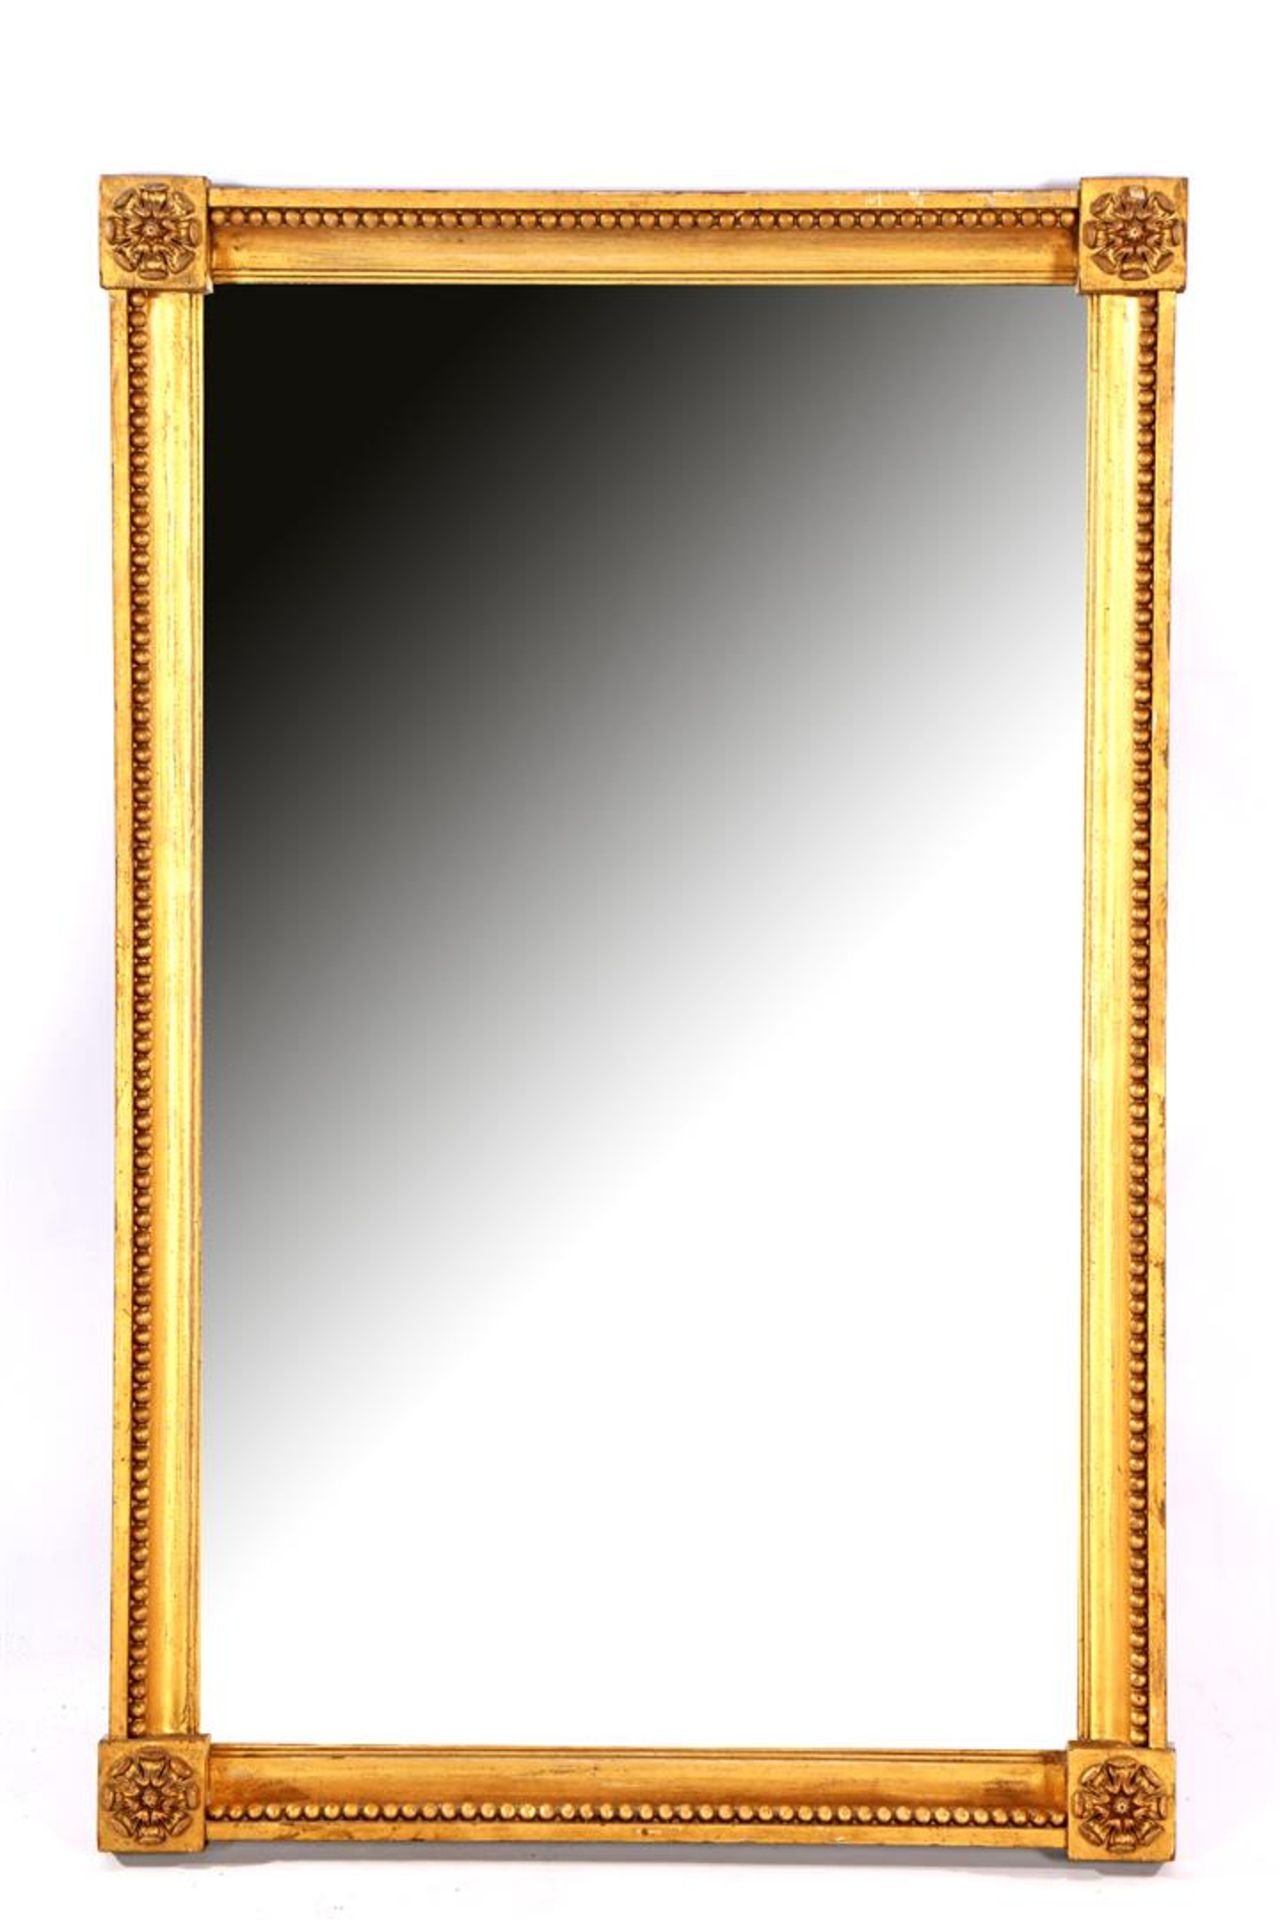 Mirror in Louis Seize style frame